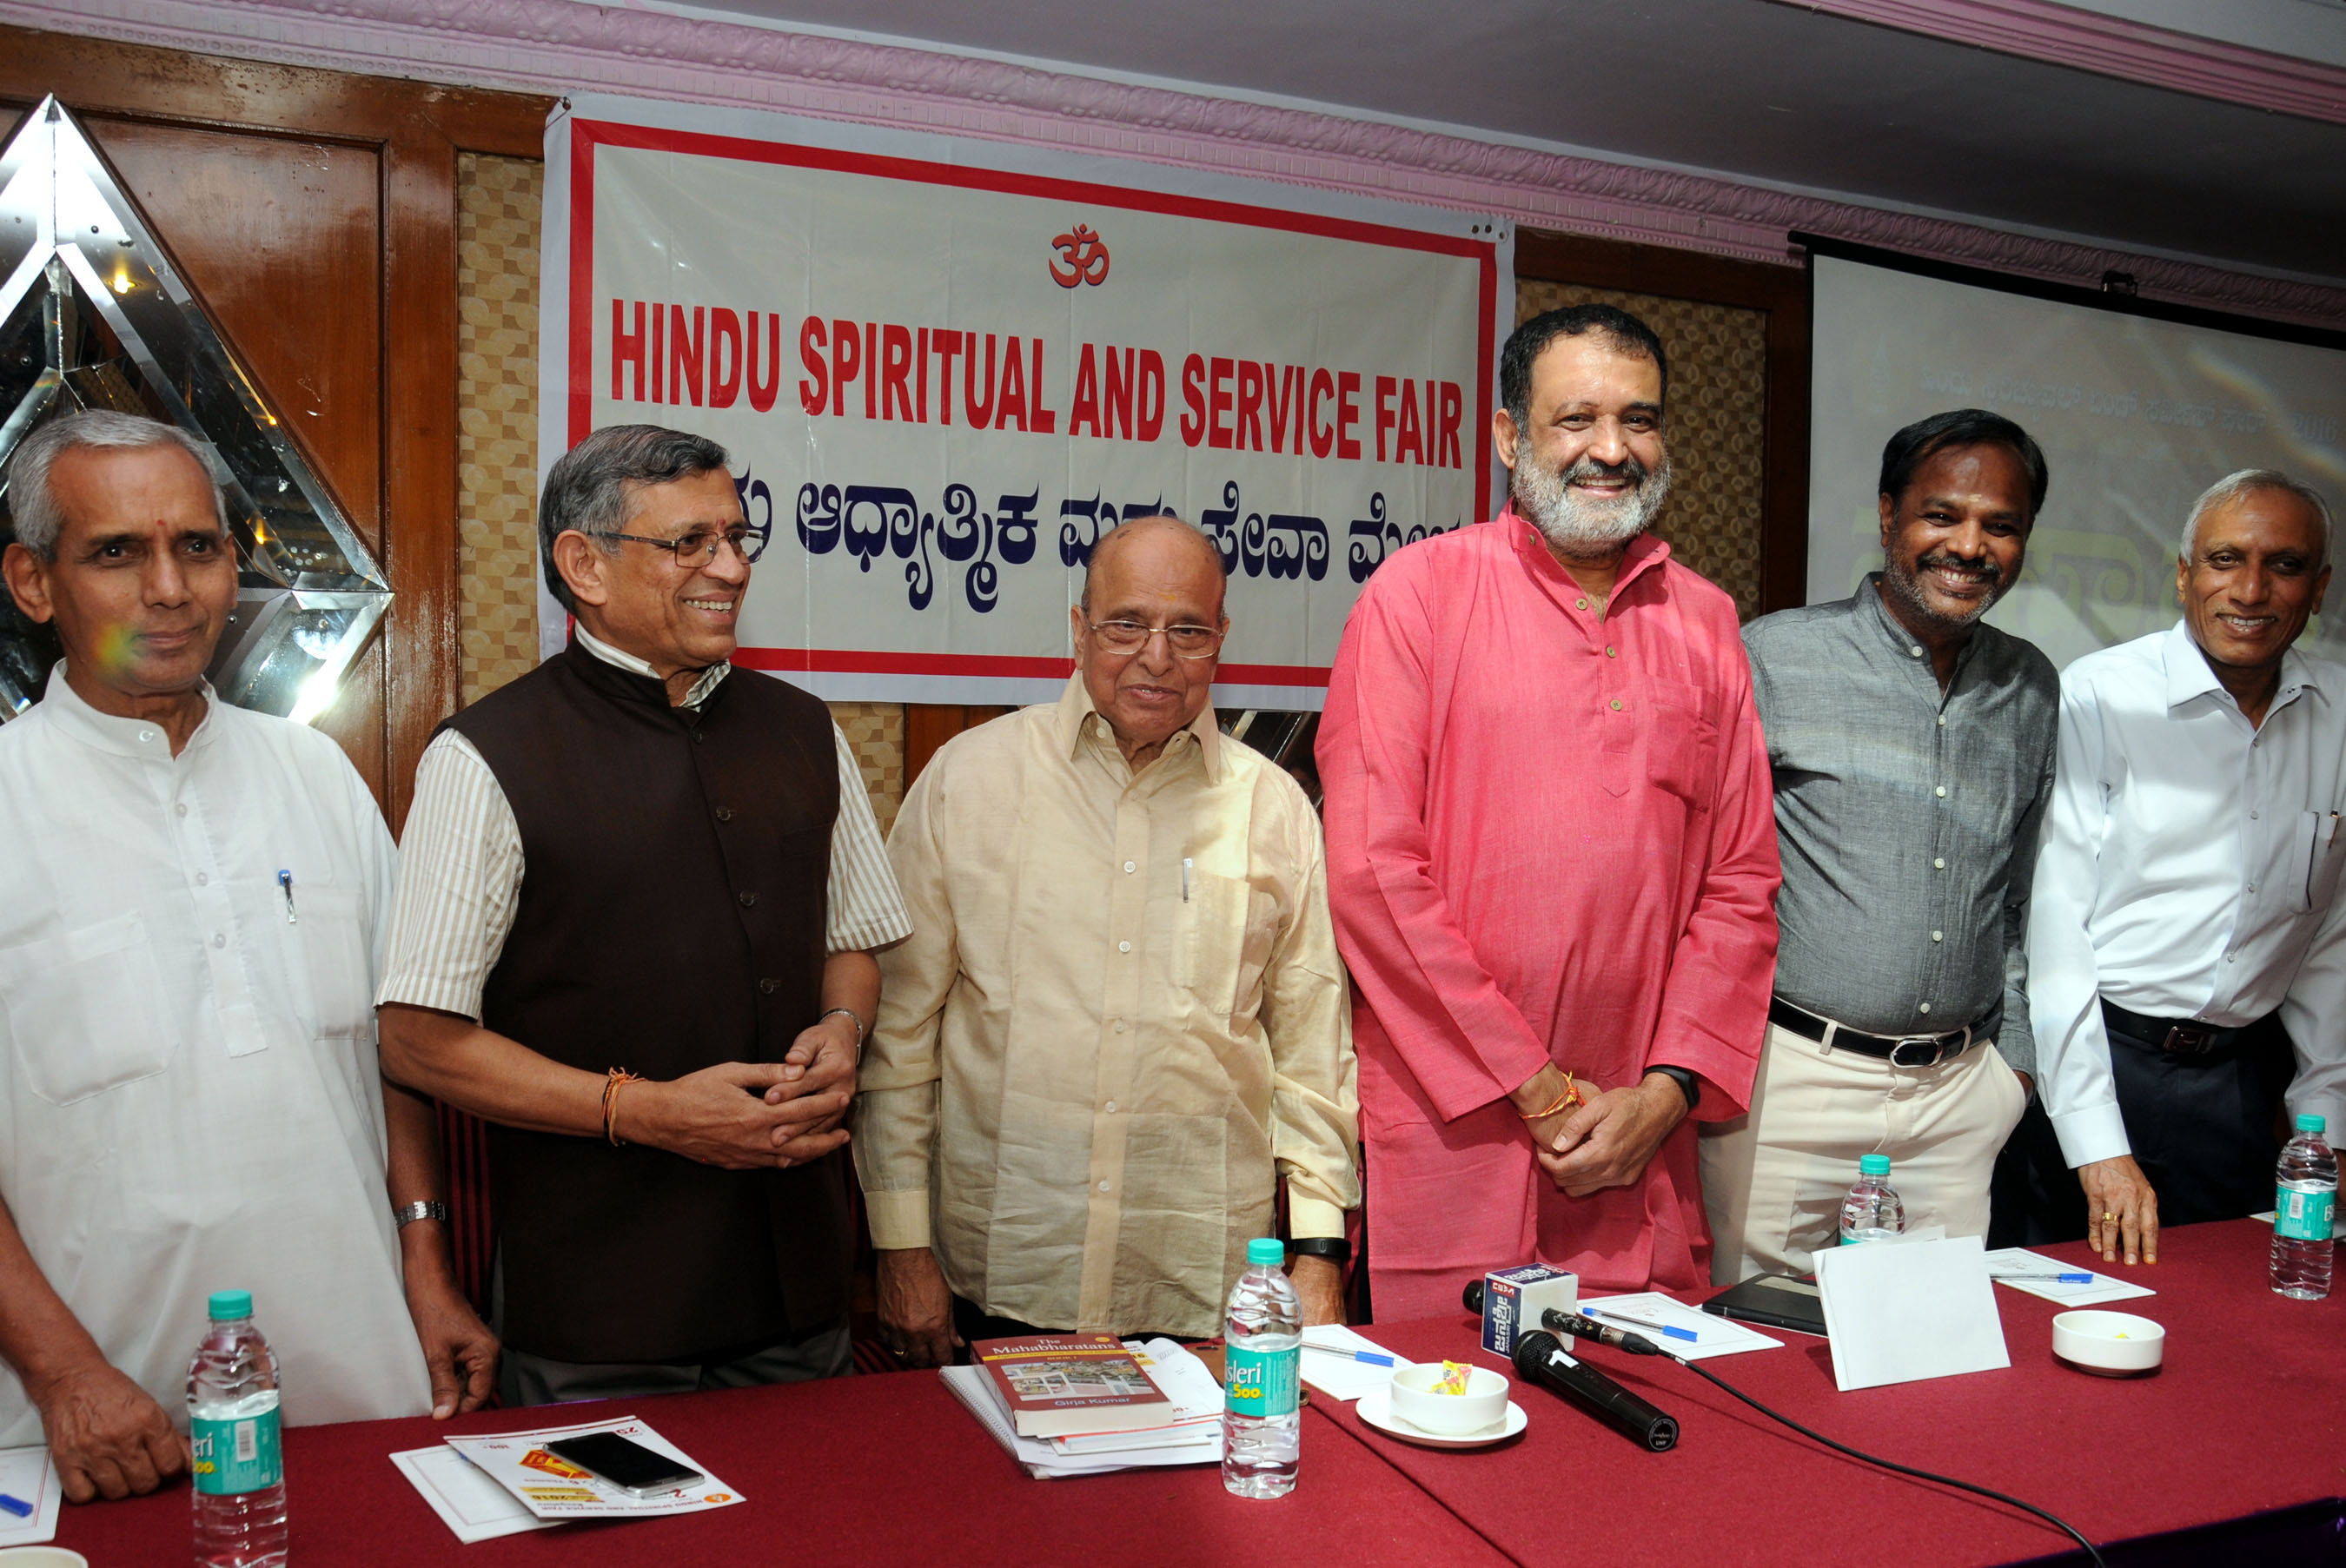 From Left to Right: Sridhar Sagar, S Gurumurthy, Dr Kasturirangan, TV Mohandas Pai, Murali, MP Kumar